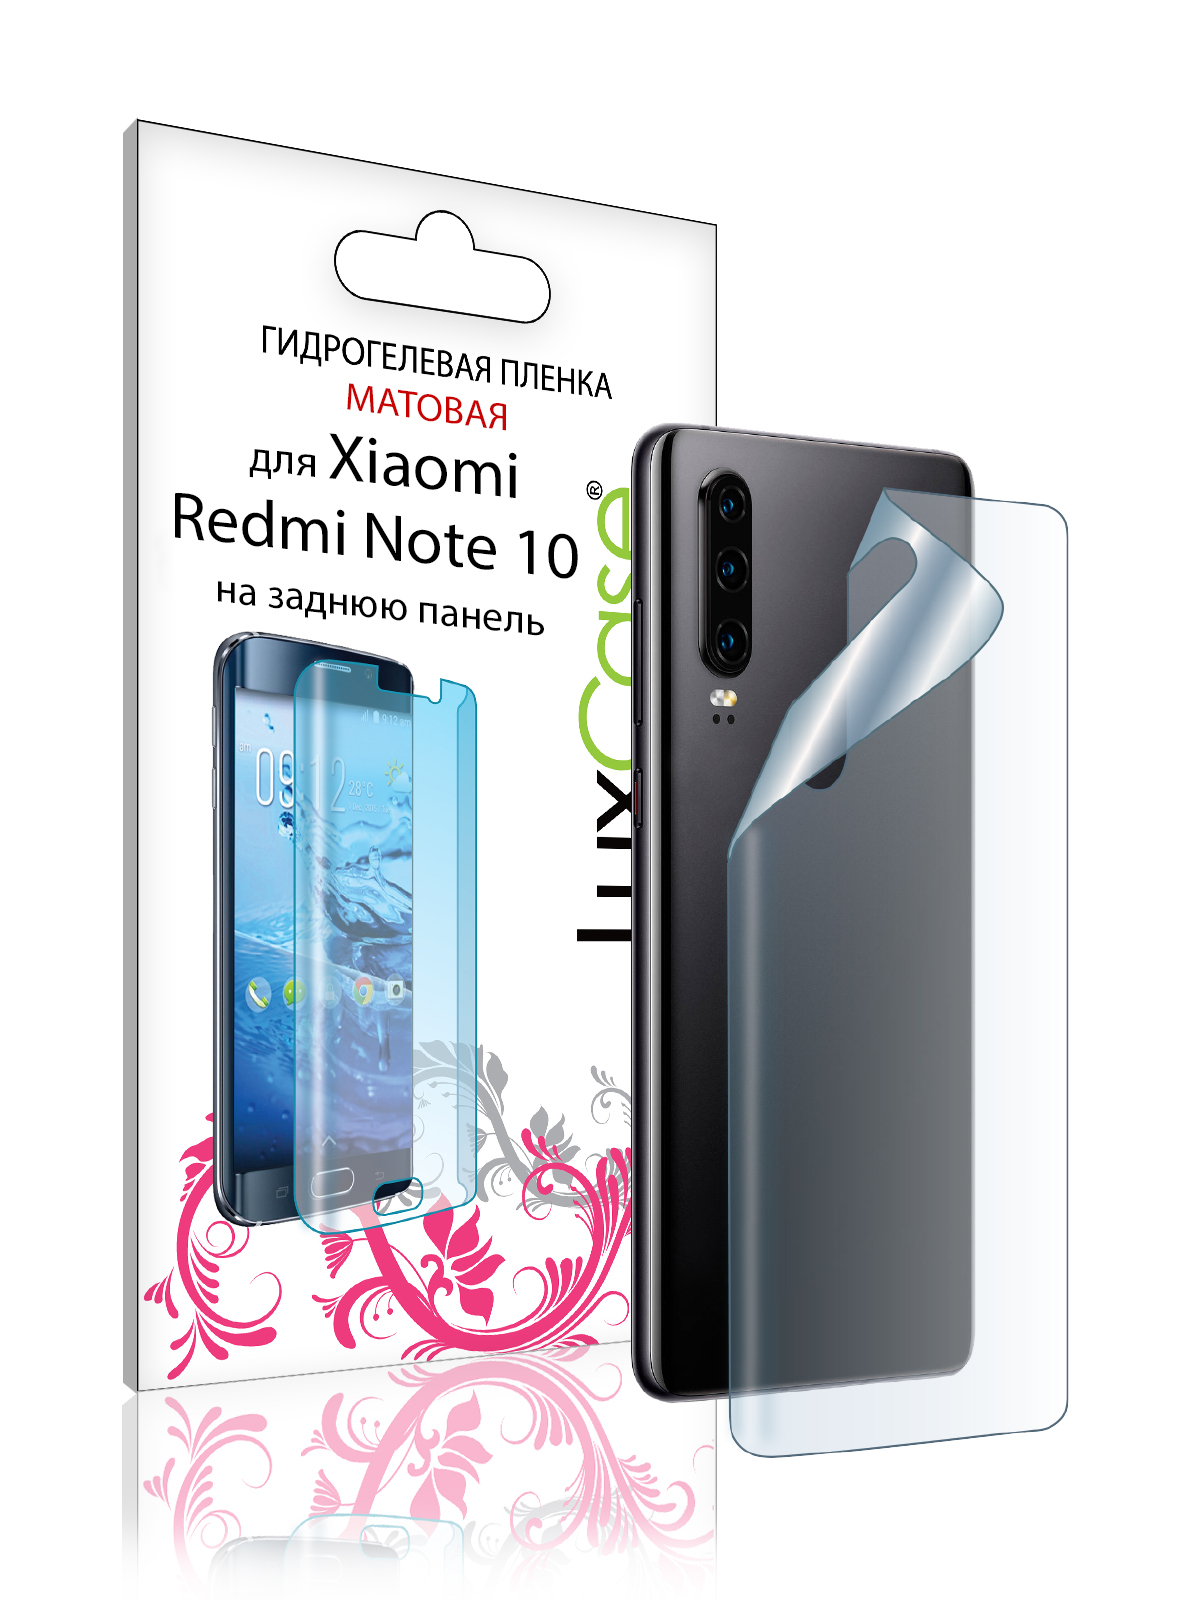 Пленка на заднюю панель LuxCase для Xiaomi Redmi Note 10 0.14mm Matte 86748 пленка на заднюю панель luxcase для xiaomi redmi note 8 0 14mm matte 86286